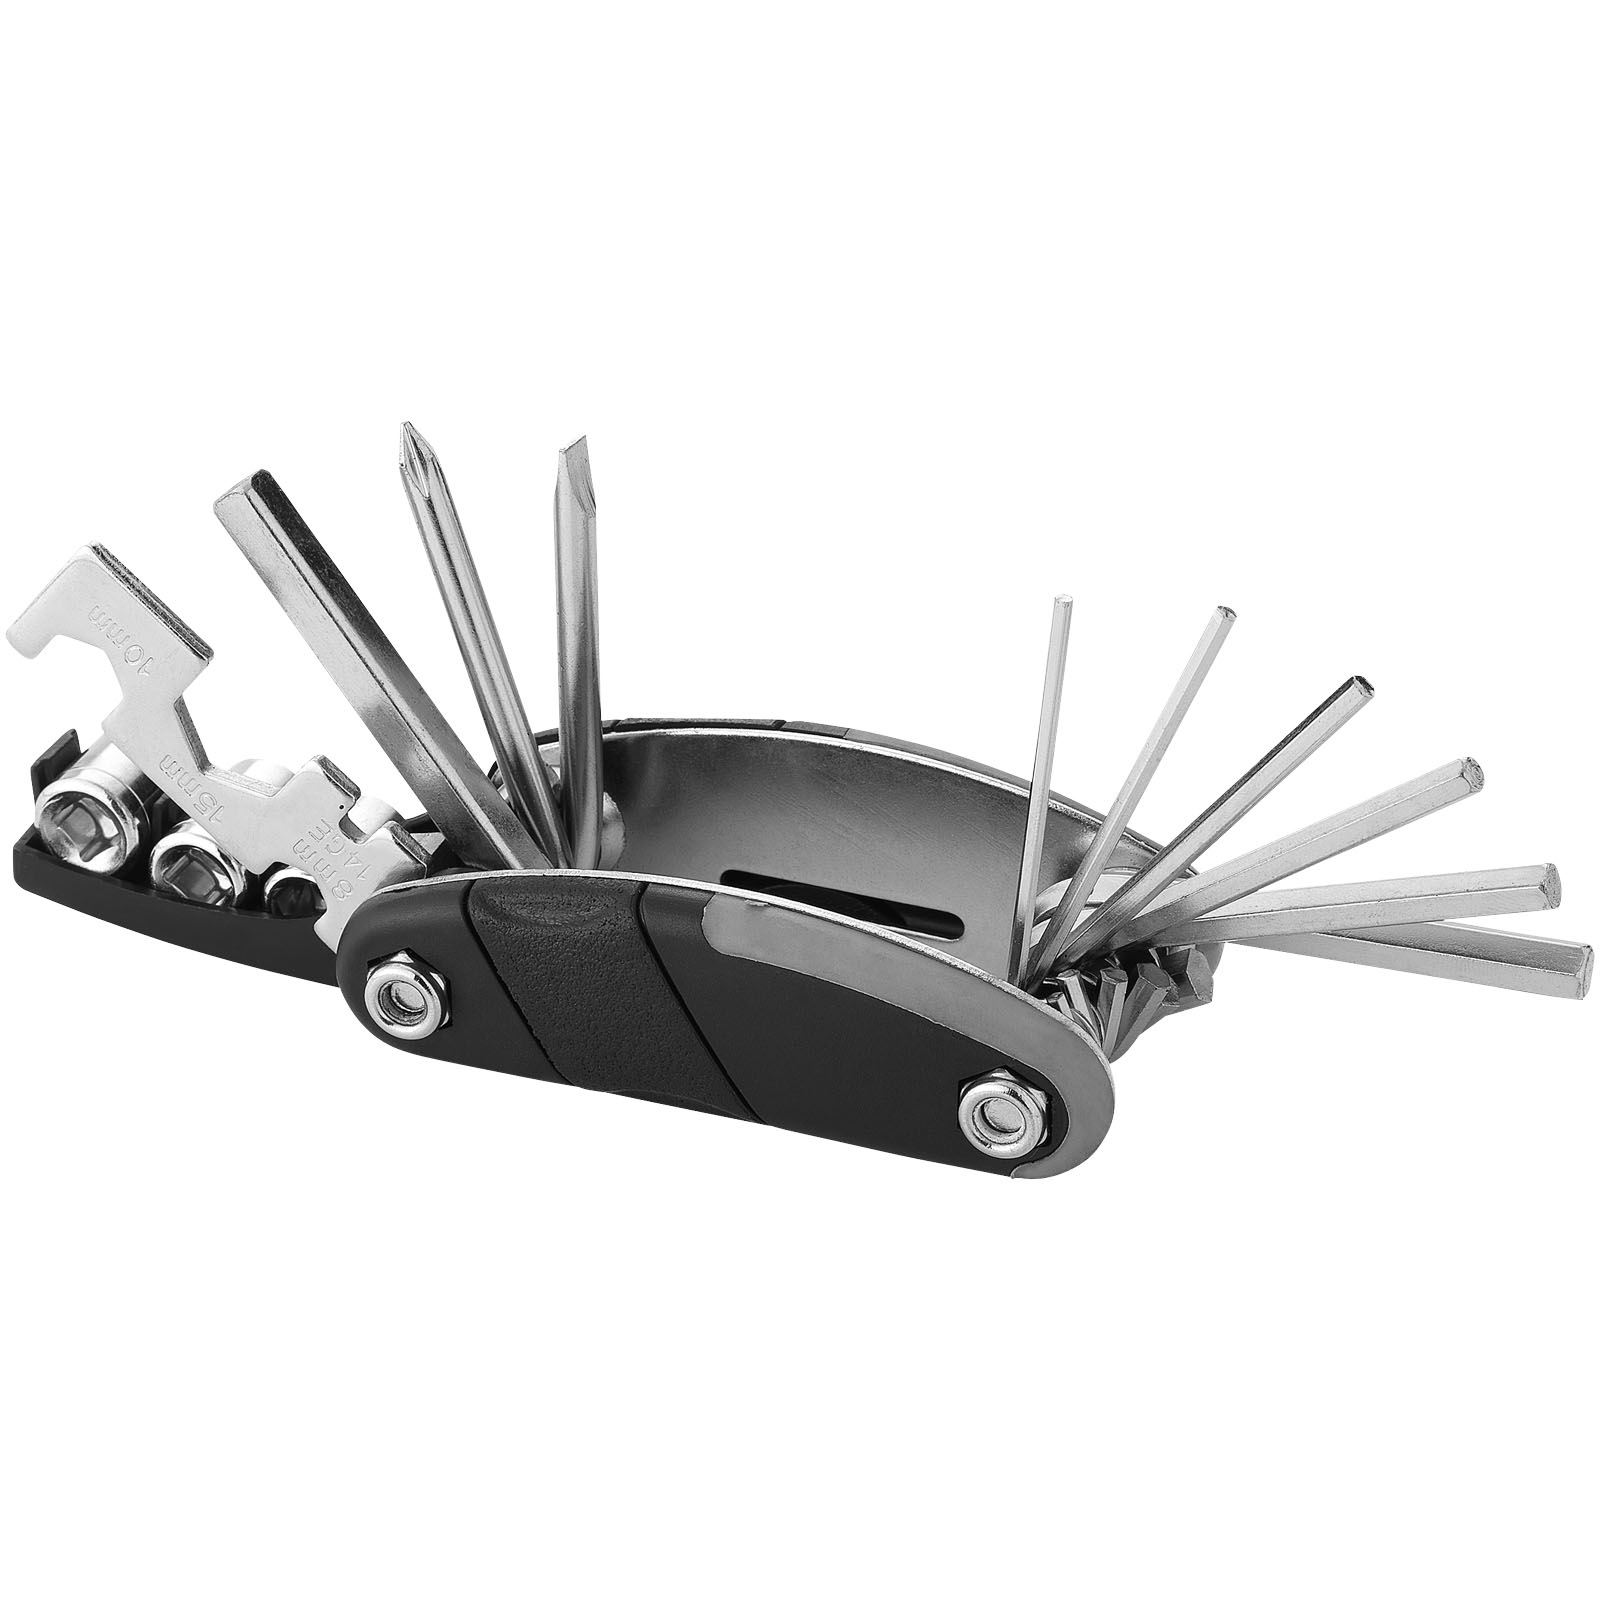 Tools & Car Accessories - Fix-it 16-function multi-tool